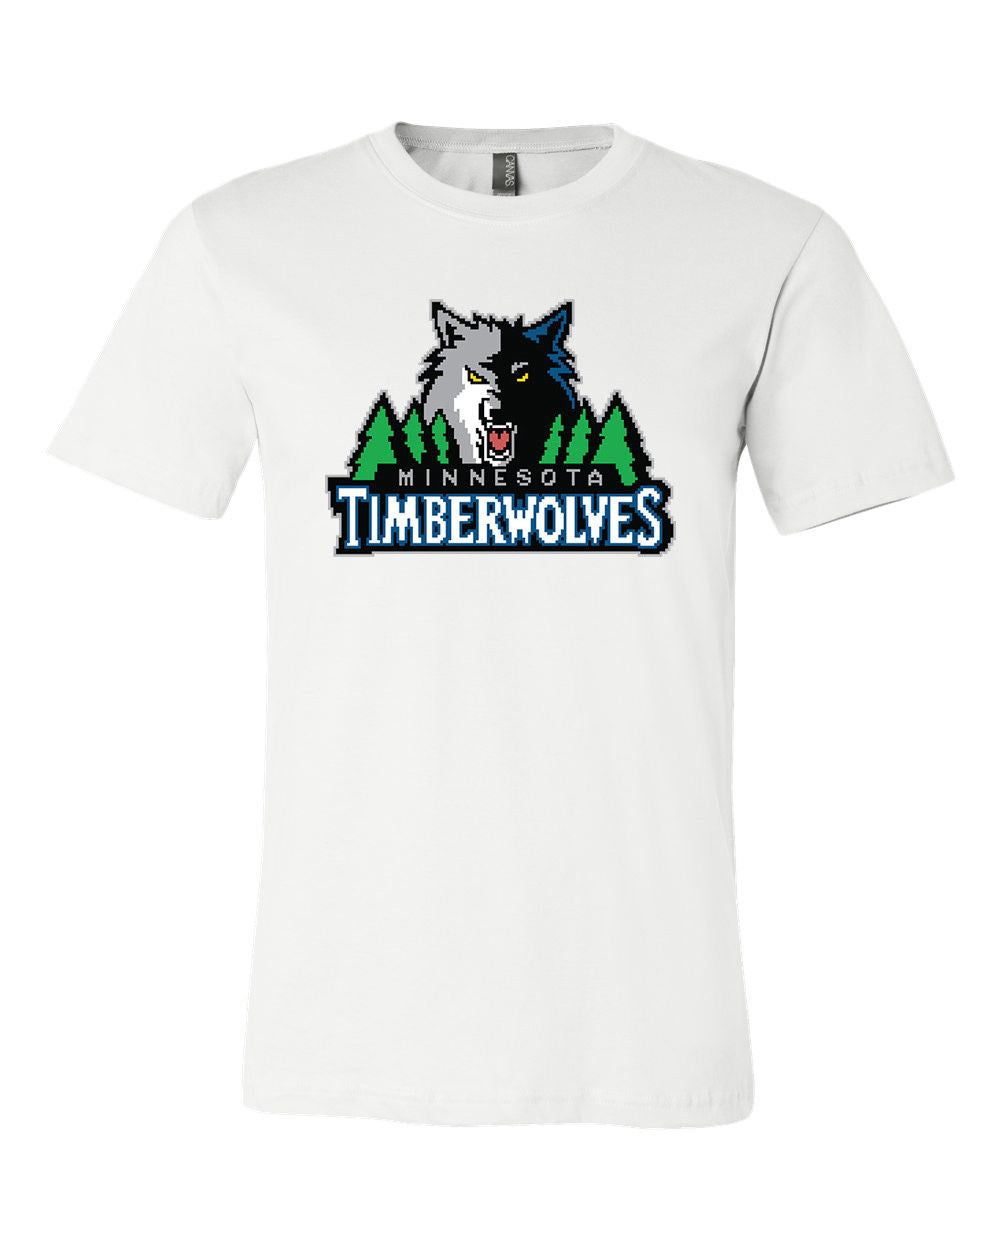 Minnesota Timberwolves Retro Logo NBA Shirt - High-Quality Printed Brand